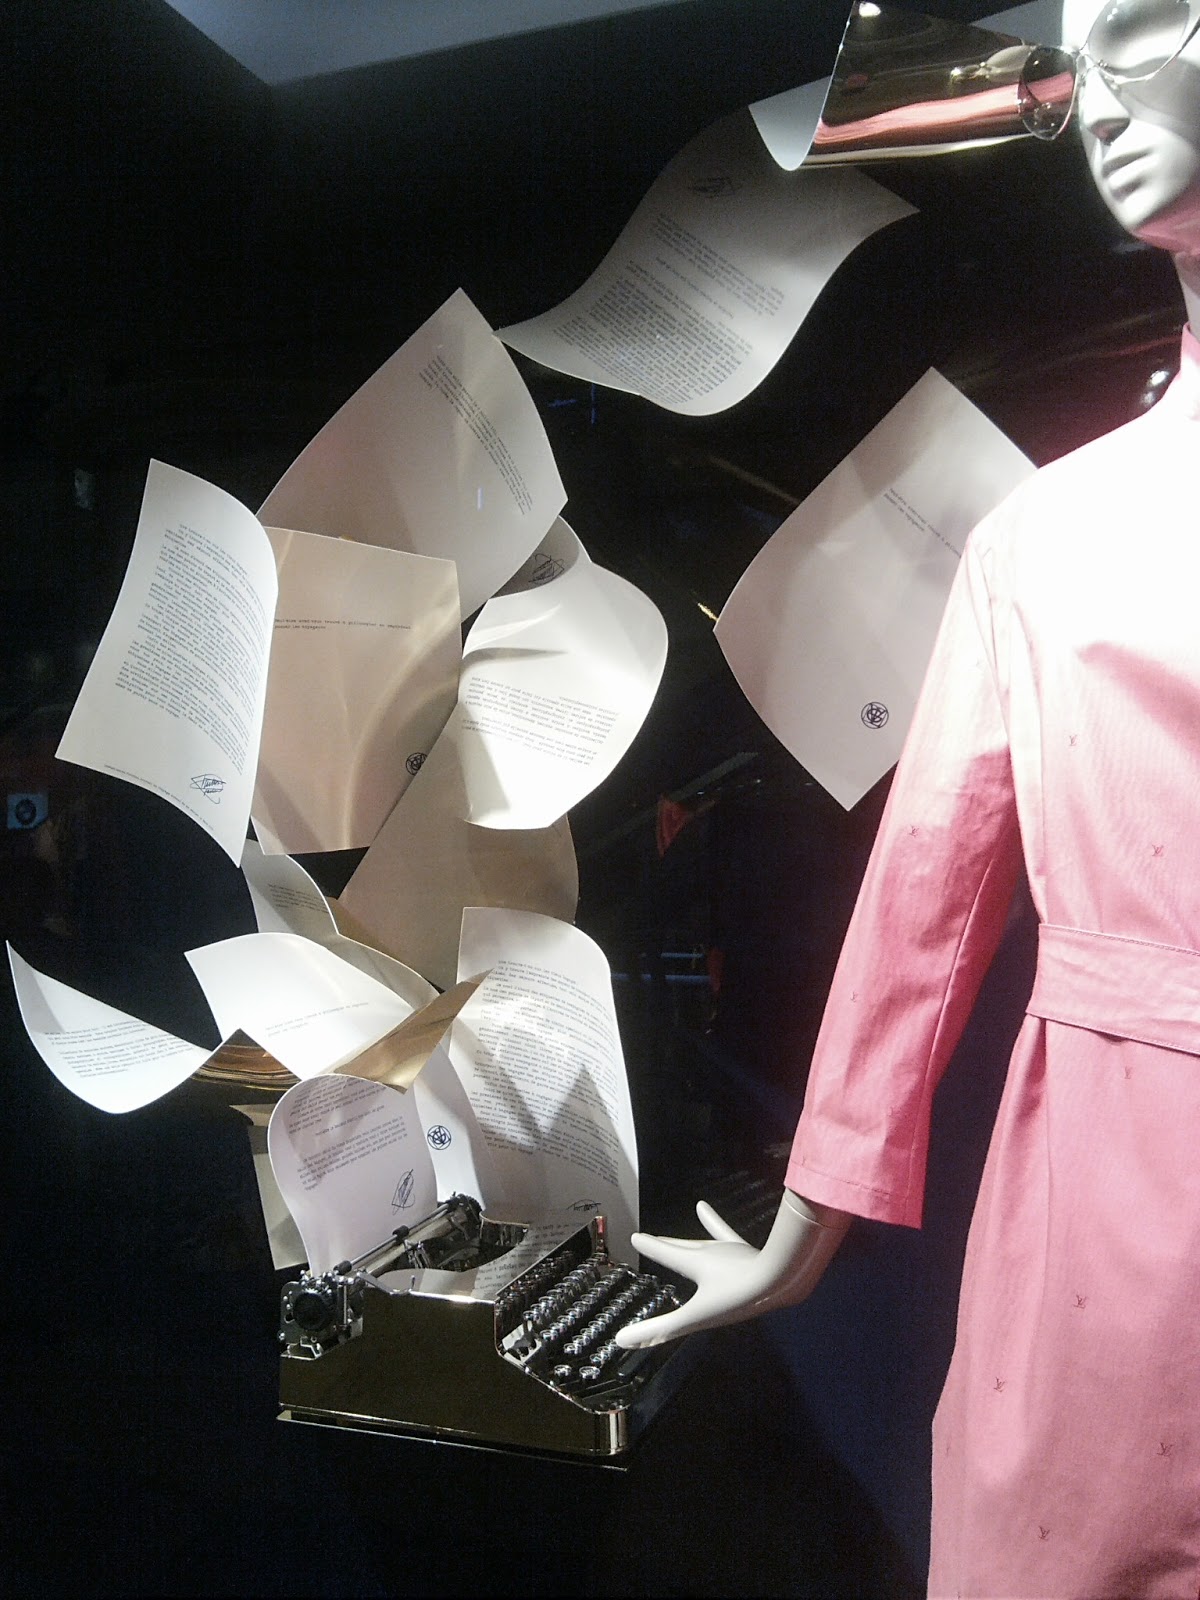 Louis Vuitton papers windows Spring 2013, Jakarta